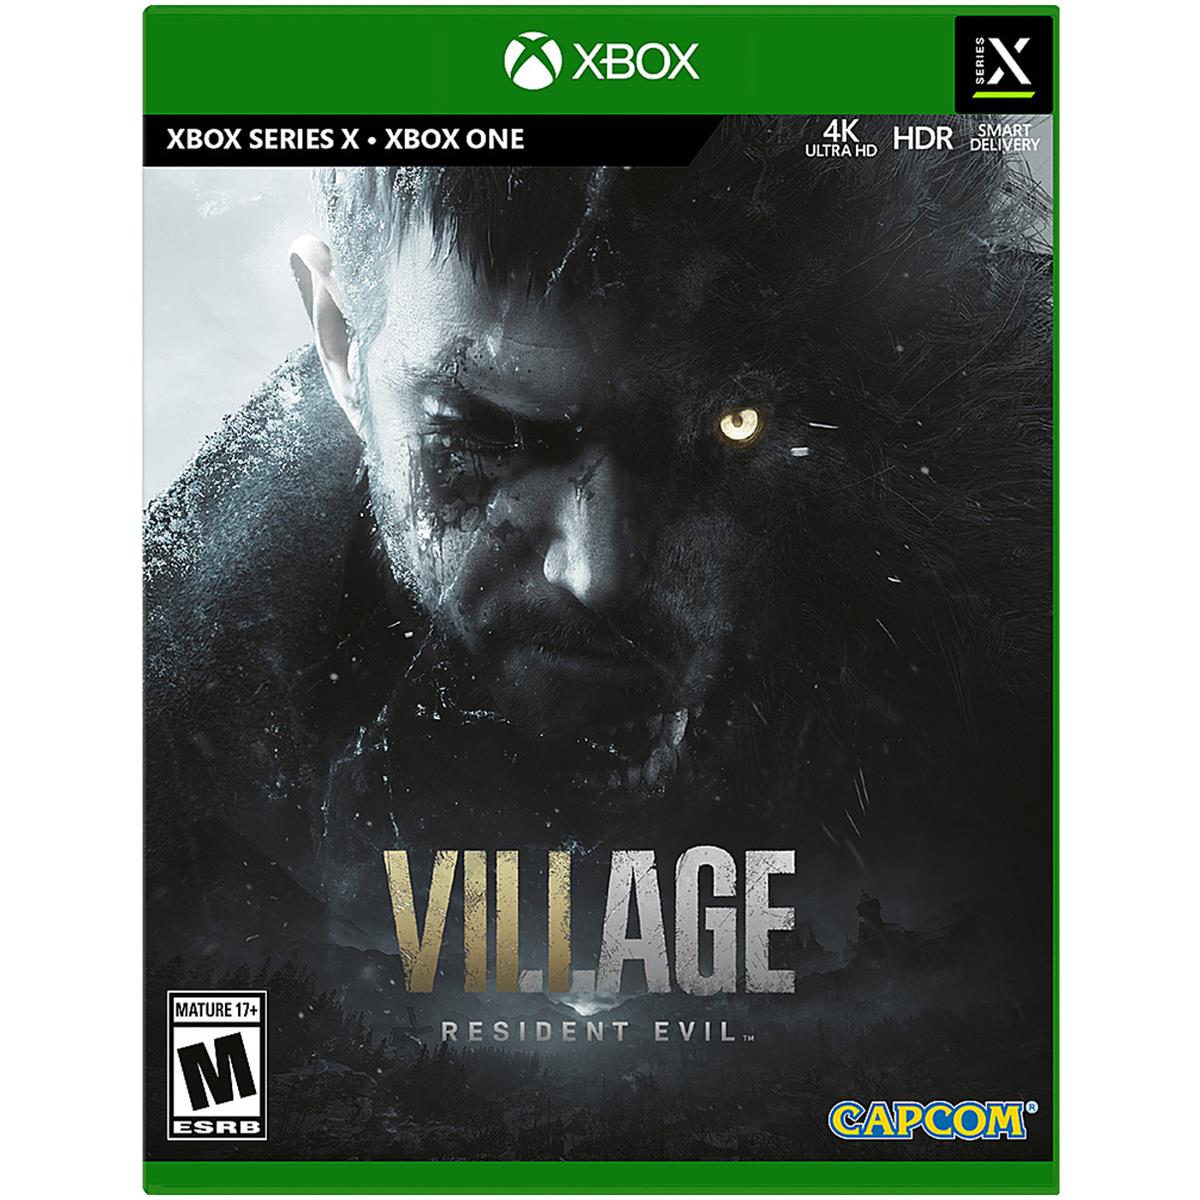 

Capcom Resident Evil Village for Xbox Series X